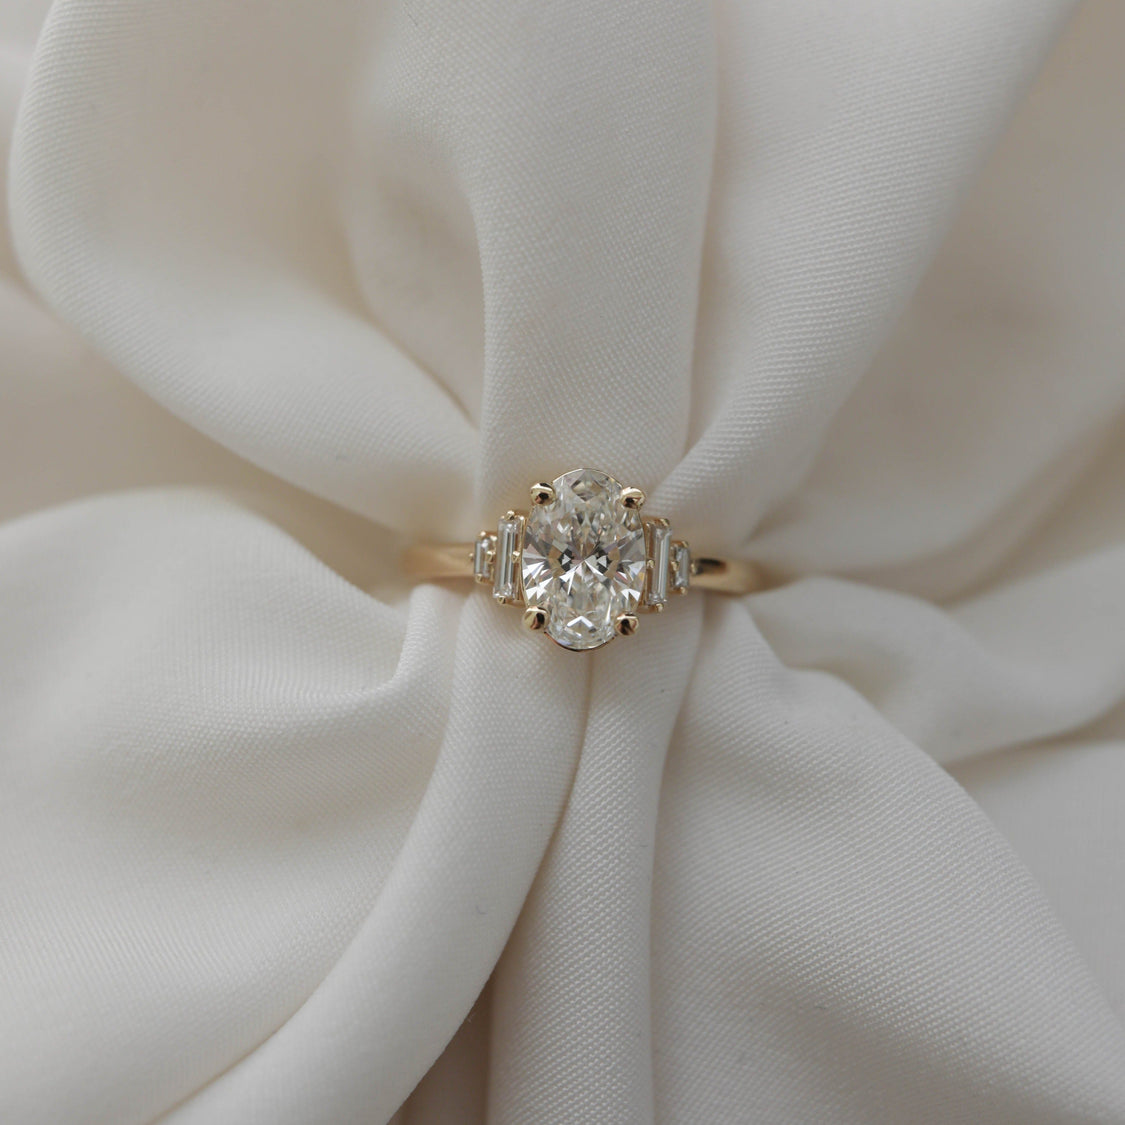 Buy Engagement Rings, Wedding Bands - Barbara Maison Fine Jewelry